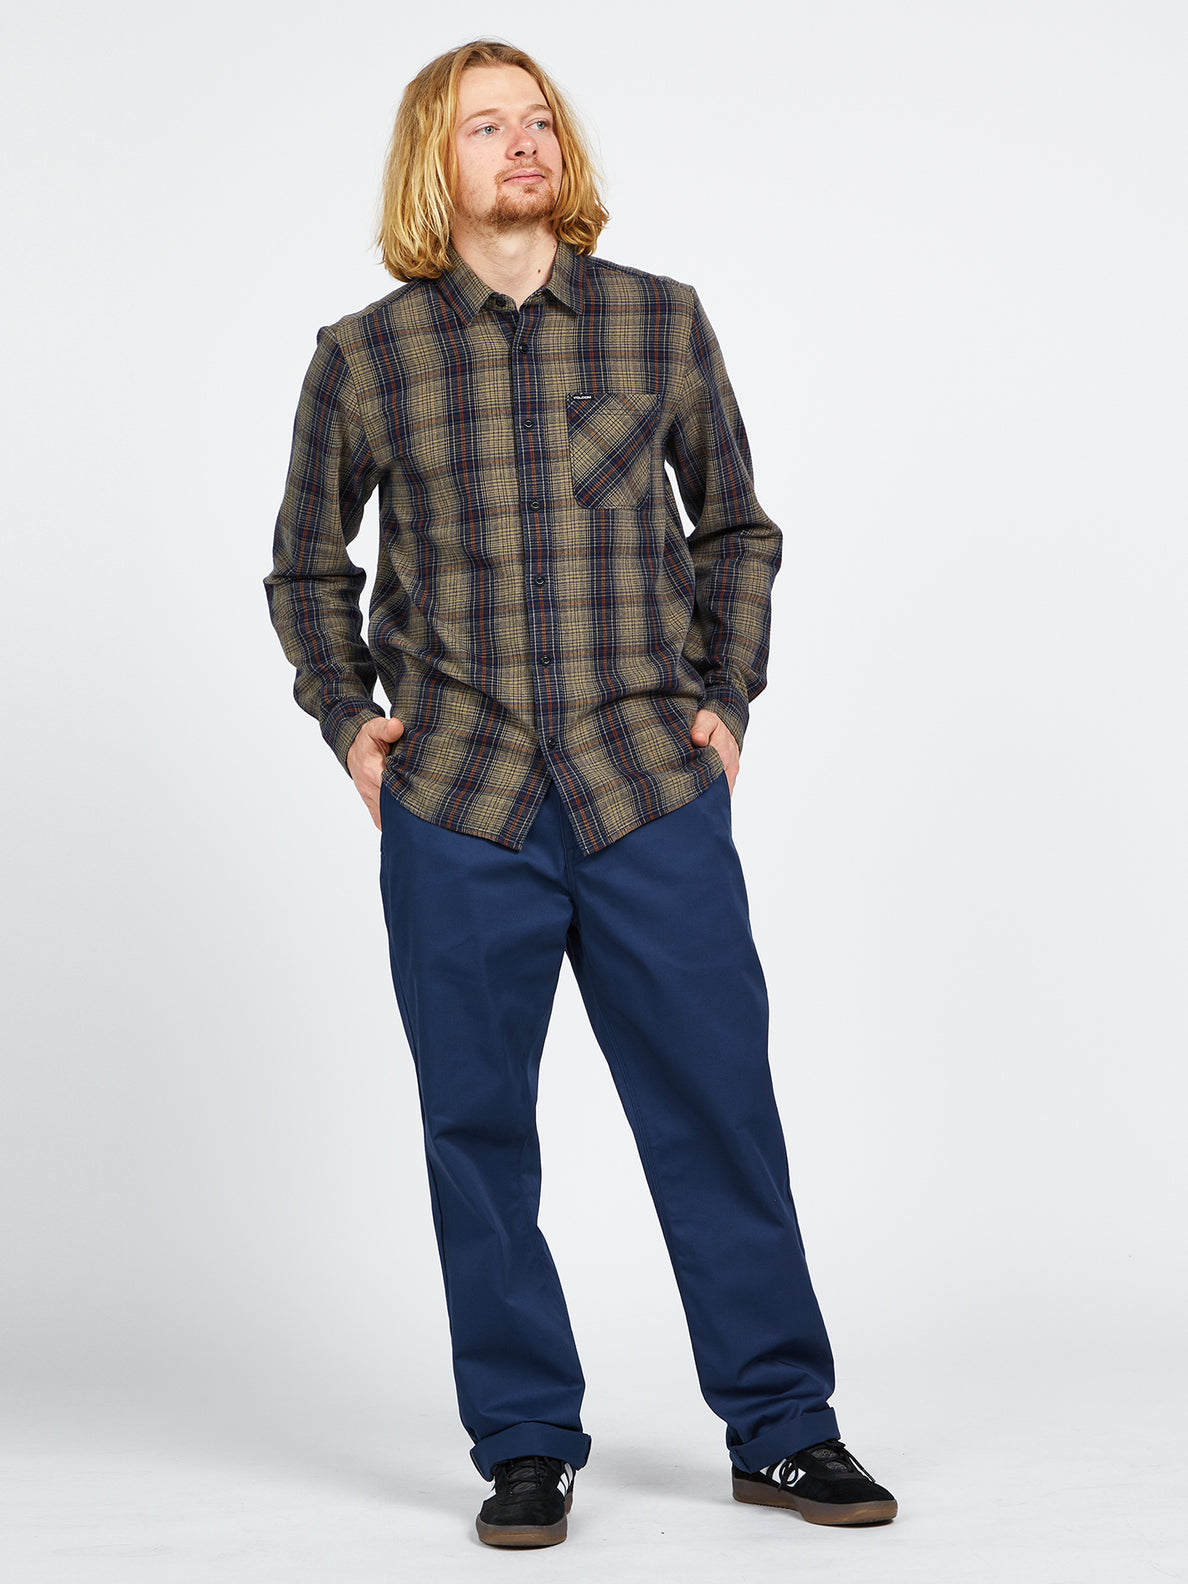 Heavy Twills Long Sleeve Flannel - Khaki (A0542205_KHA) [F]